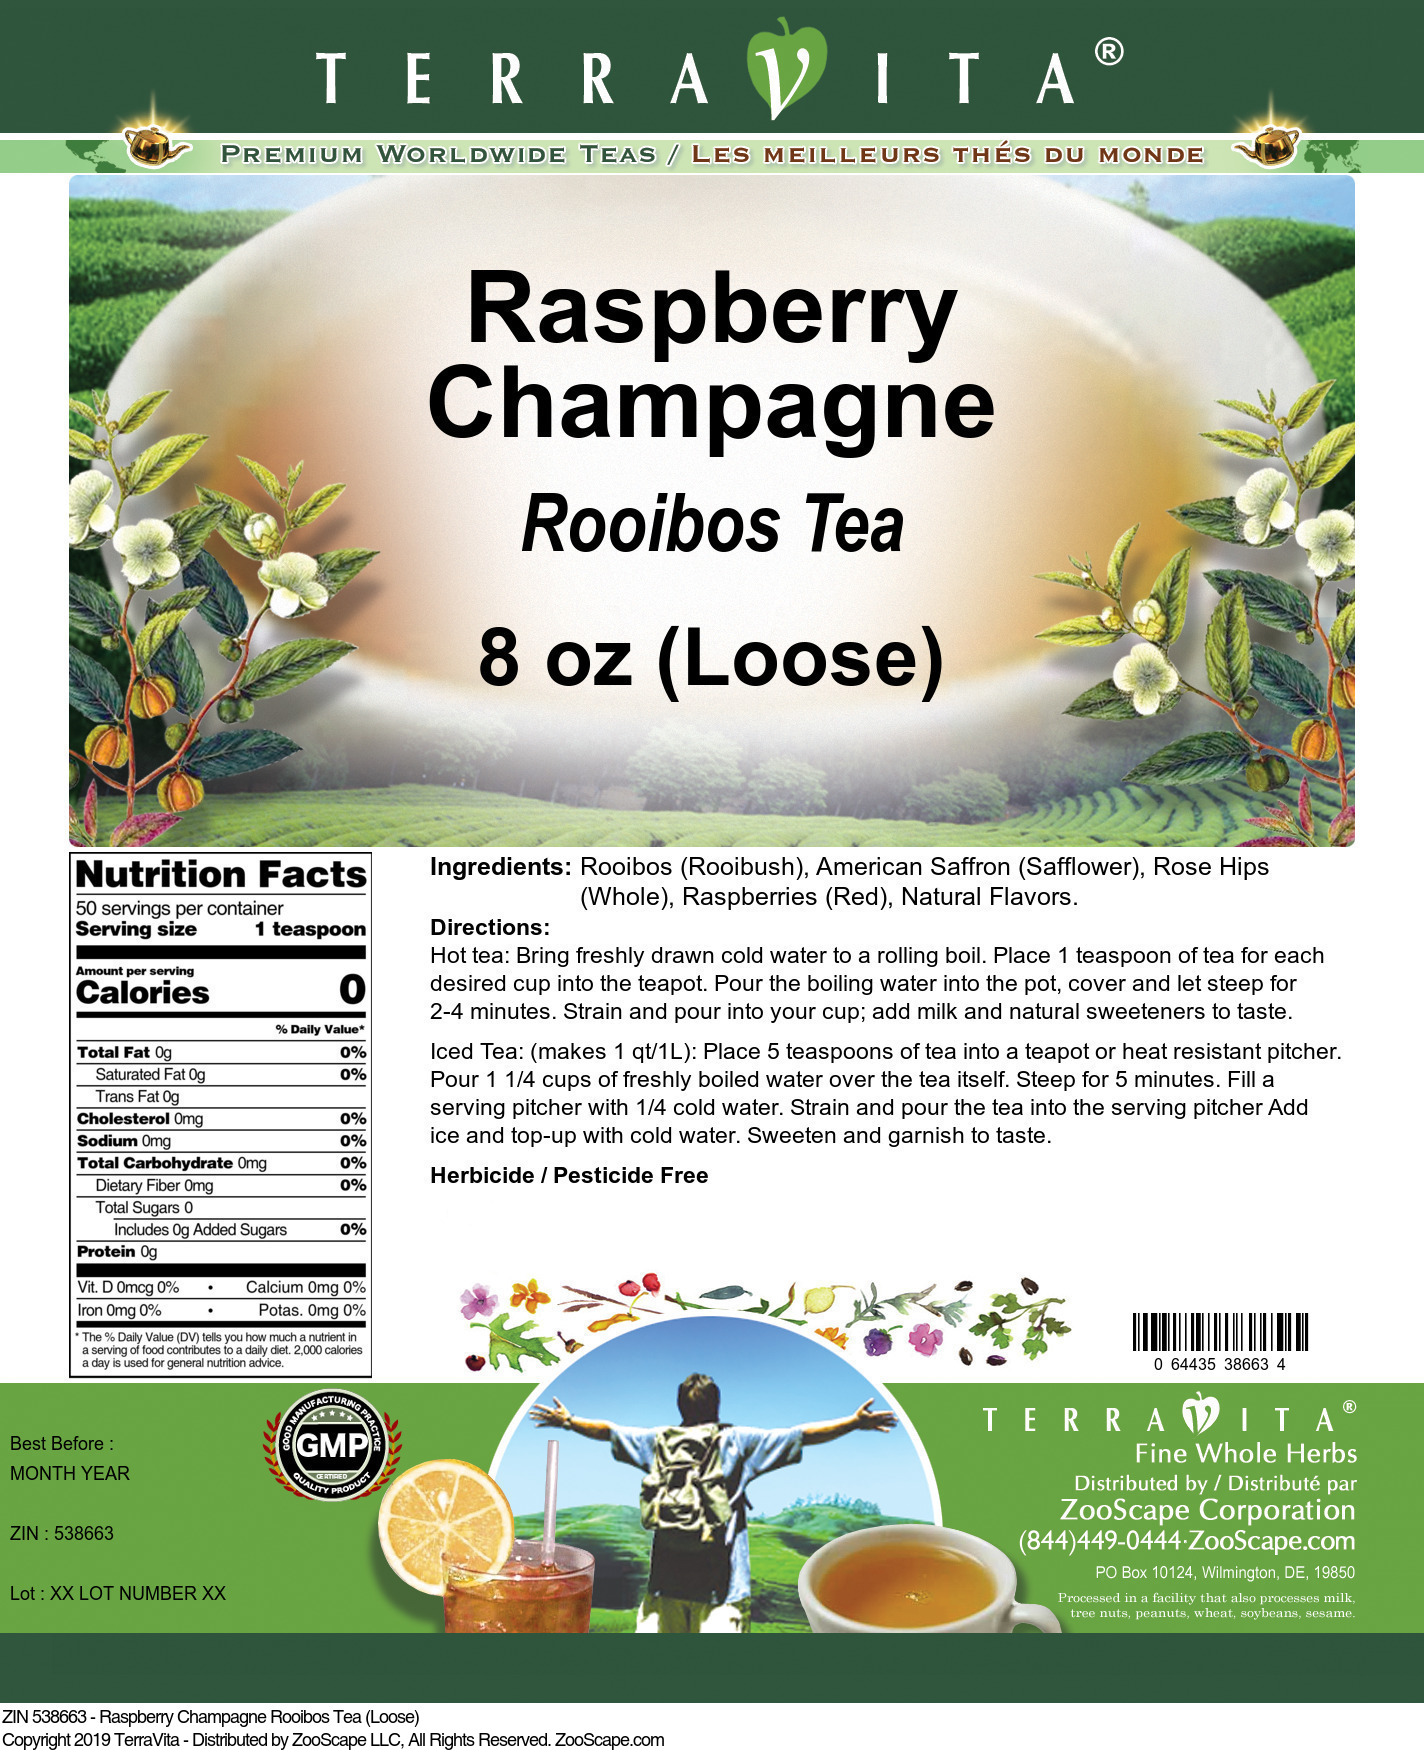 Raspberry Champagne Rooibos Tea (Loose) - Label